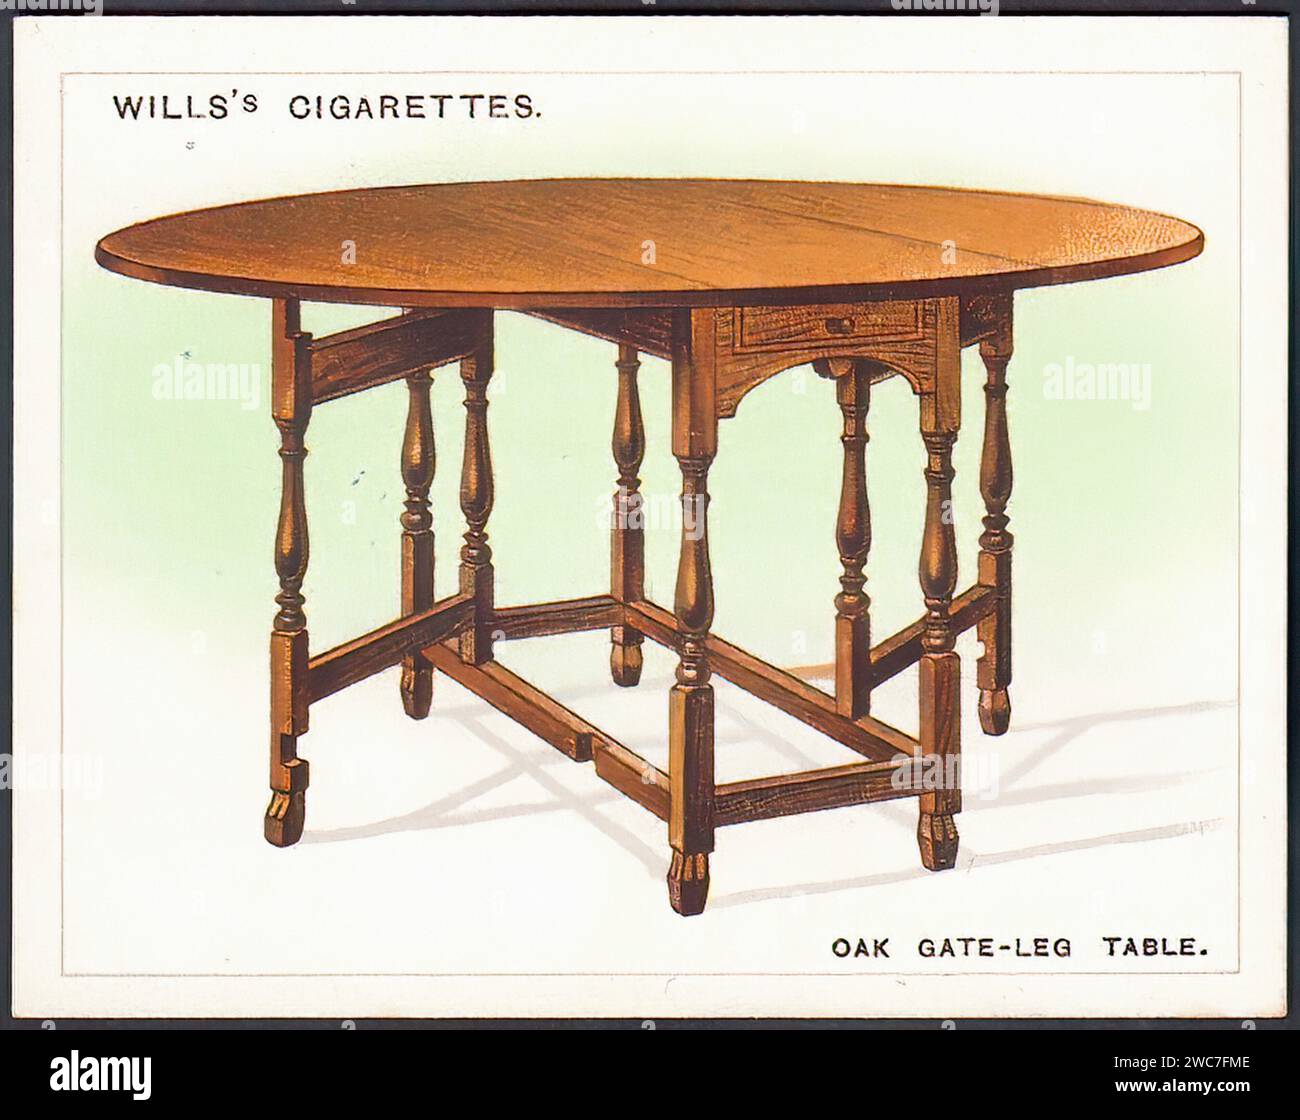 Oak Gate-Leg Table - Vintage Cigarette Card Illustration Stock Photo